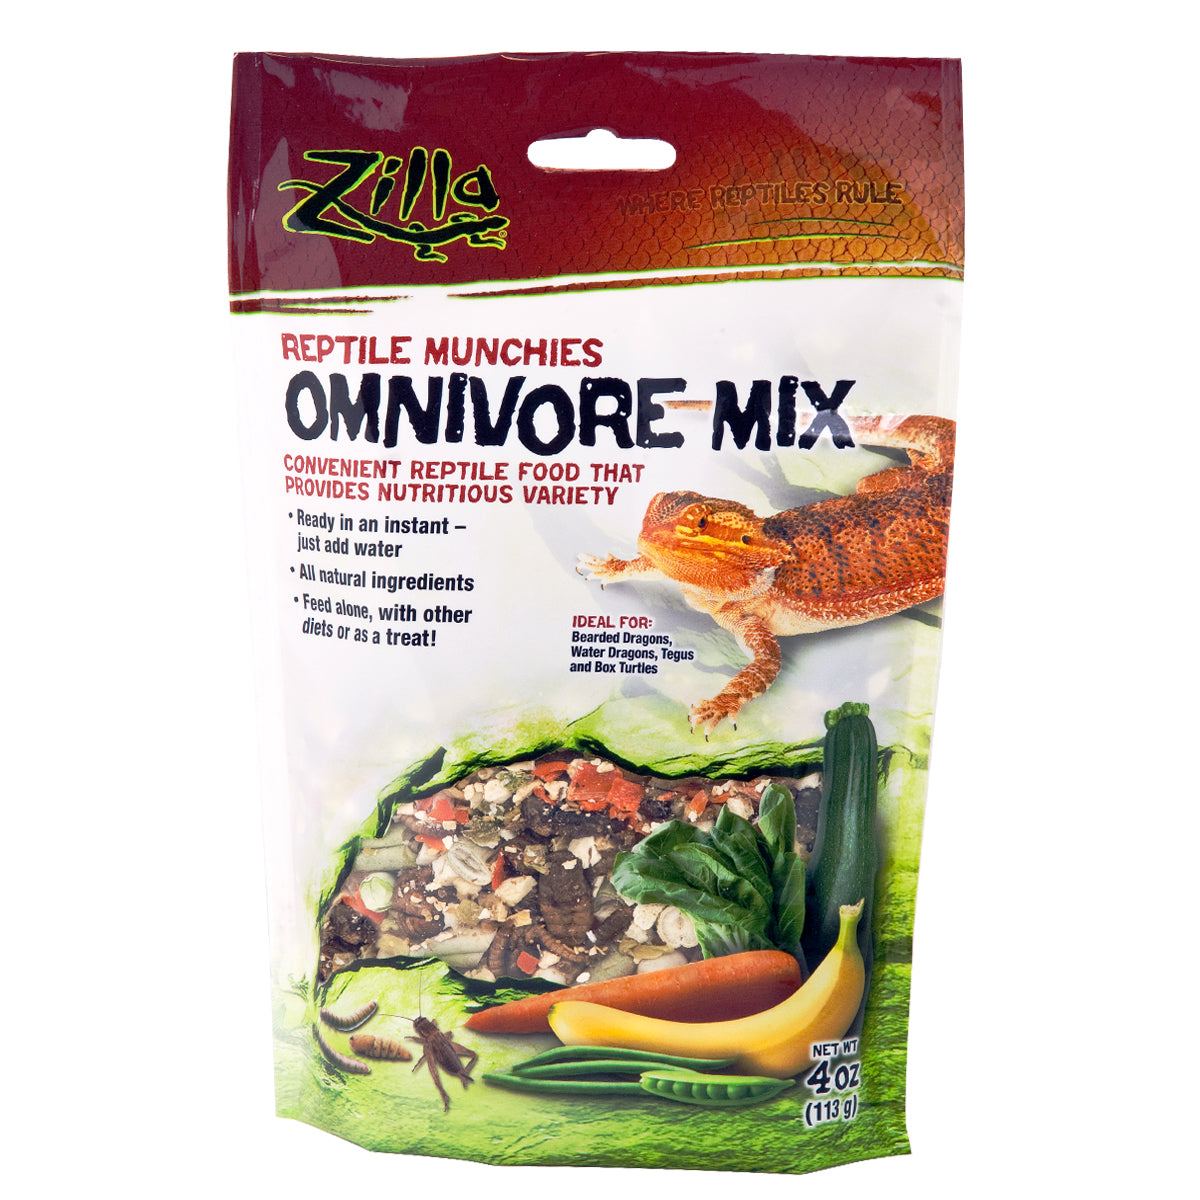 Zilla Reptile Munchies Omnivore Mix - 4 oz